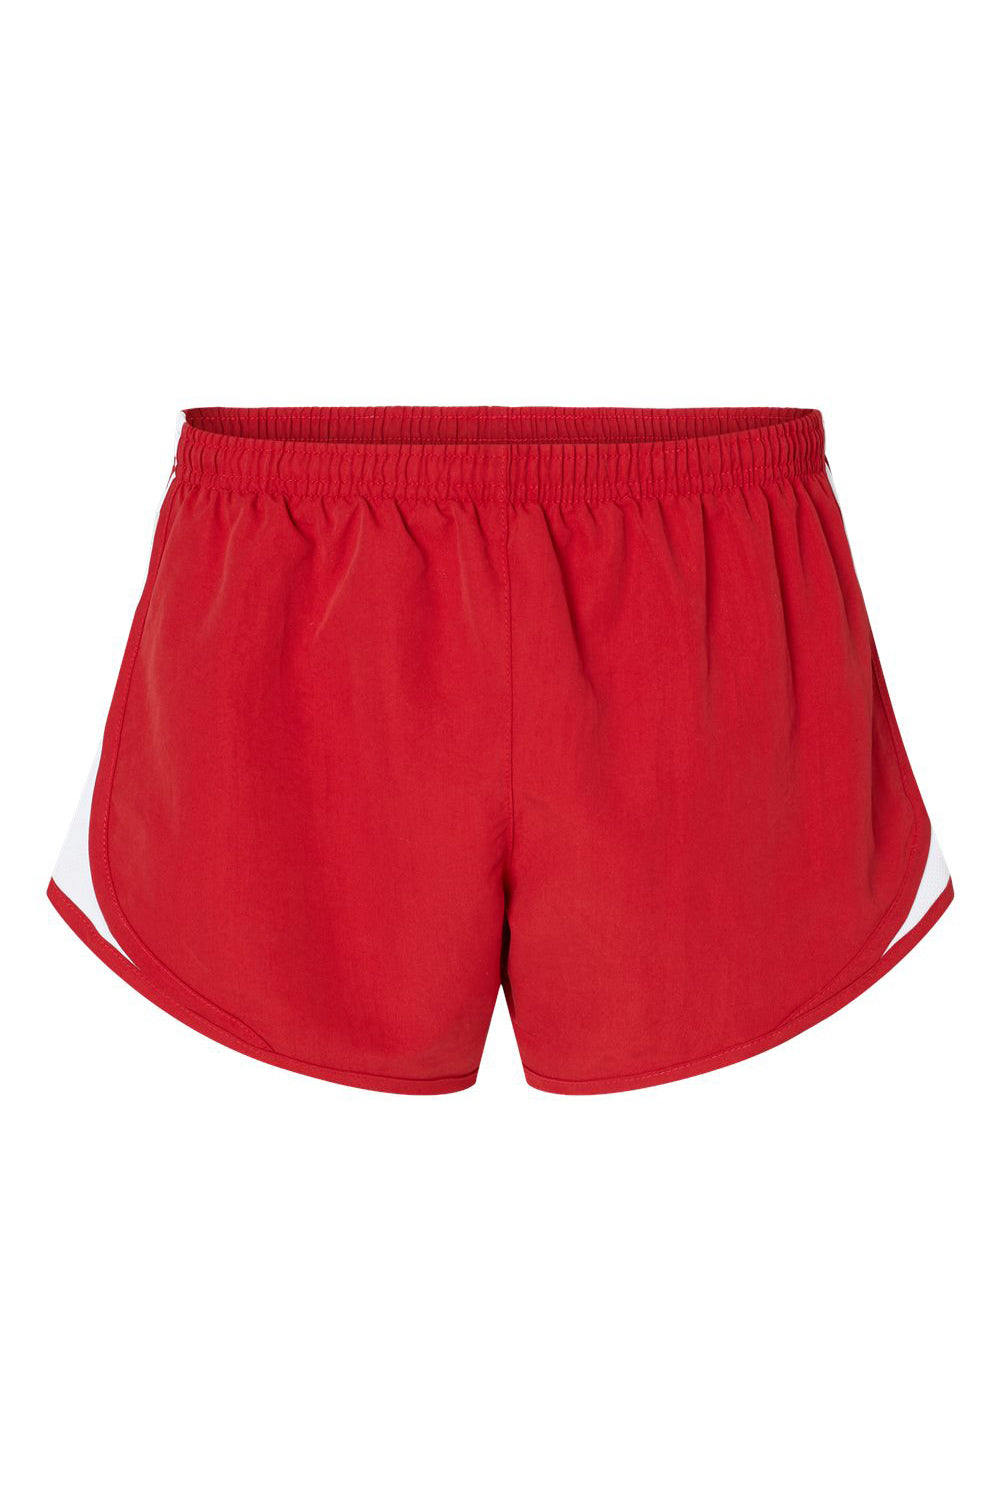 Boxercraft BW6102 Womens Sport Shorts Red Flat Front